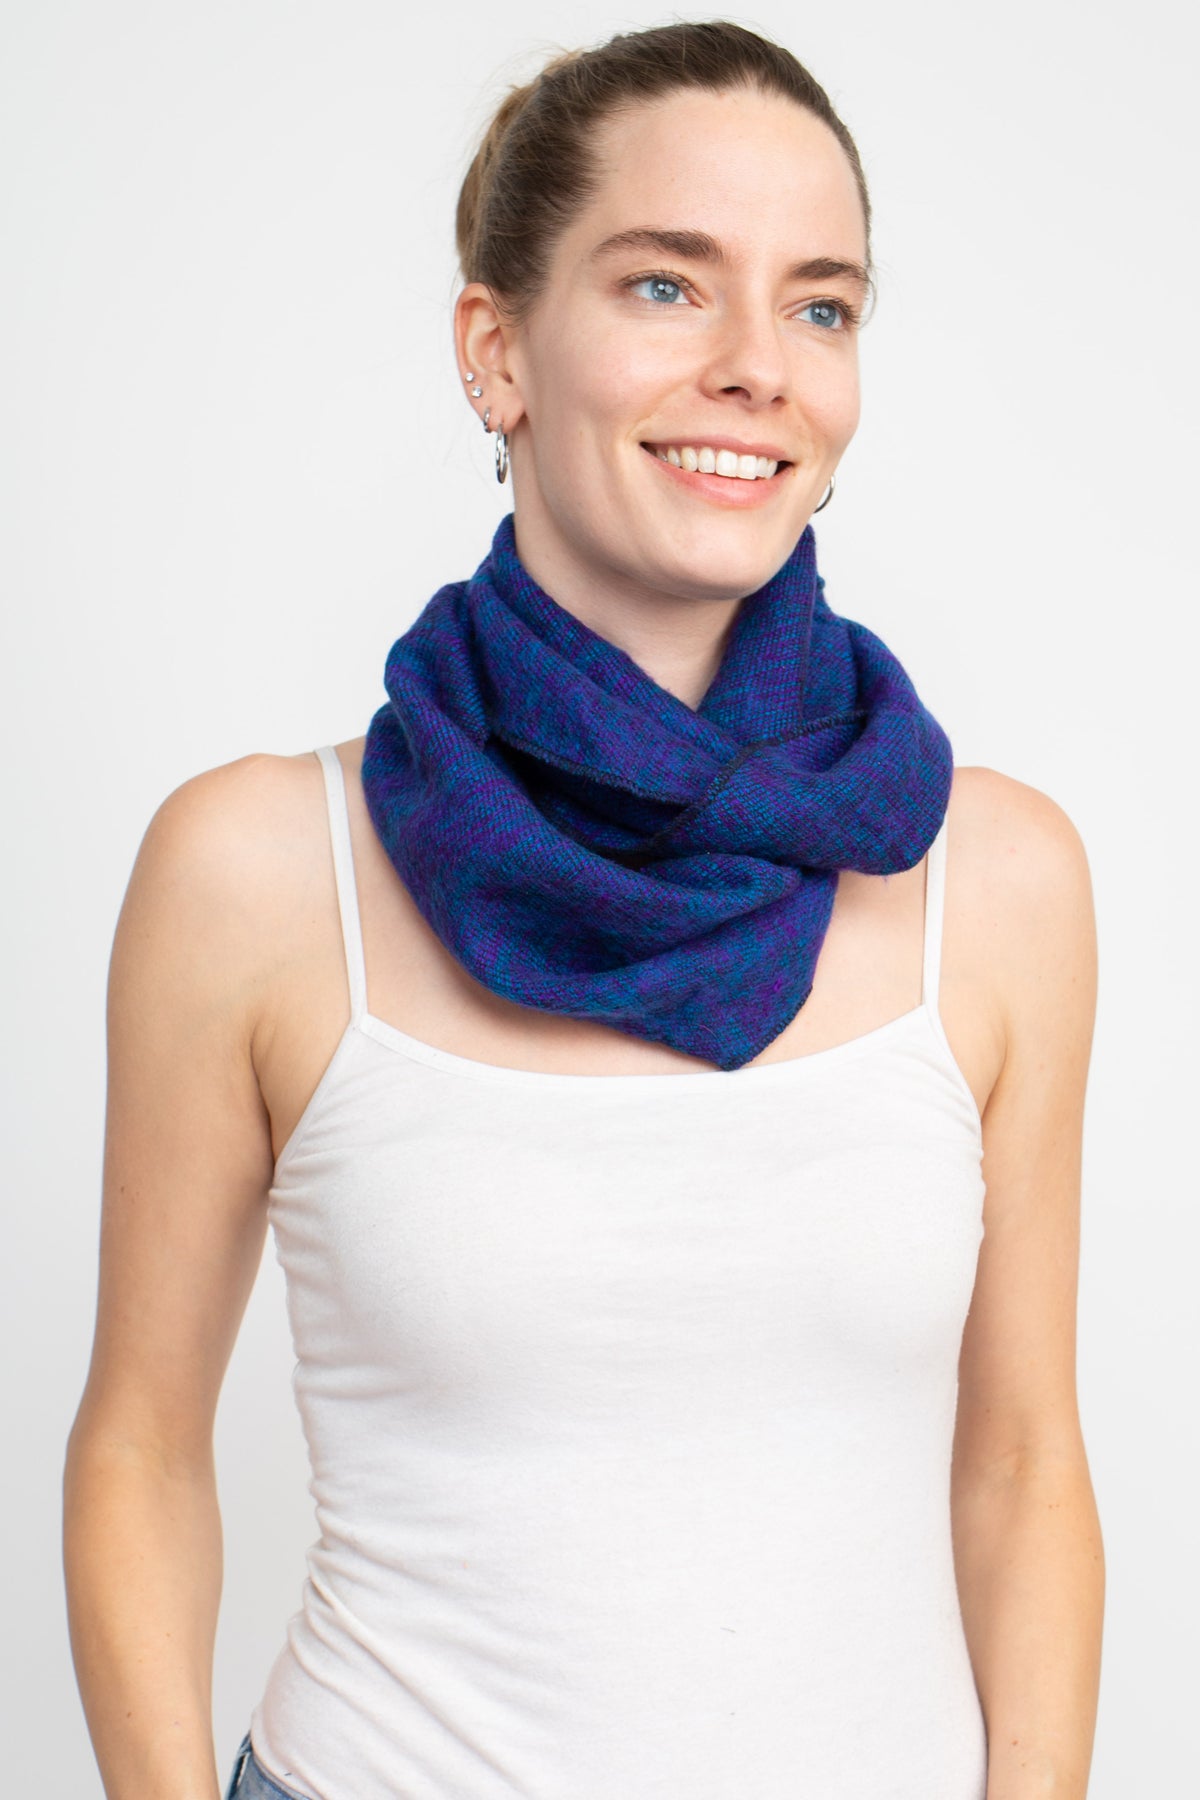 Women's soft Infinity Winter scarf